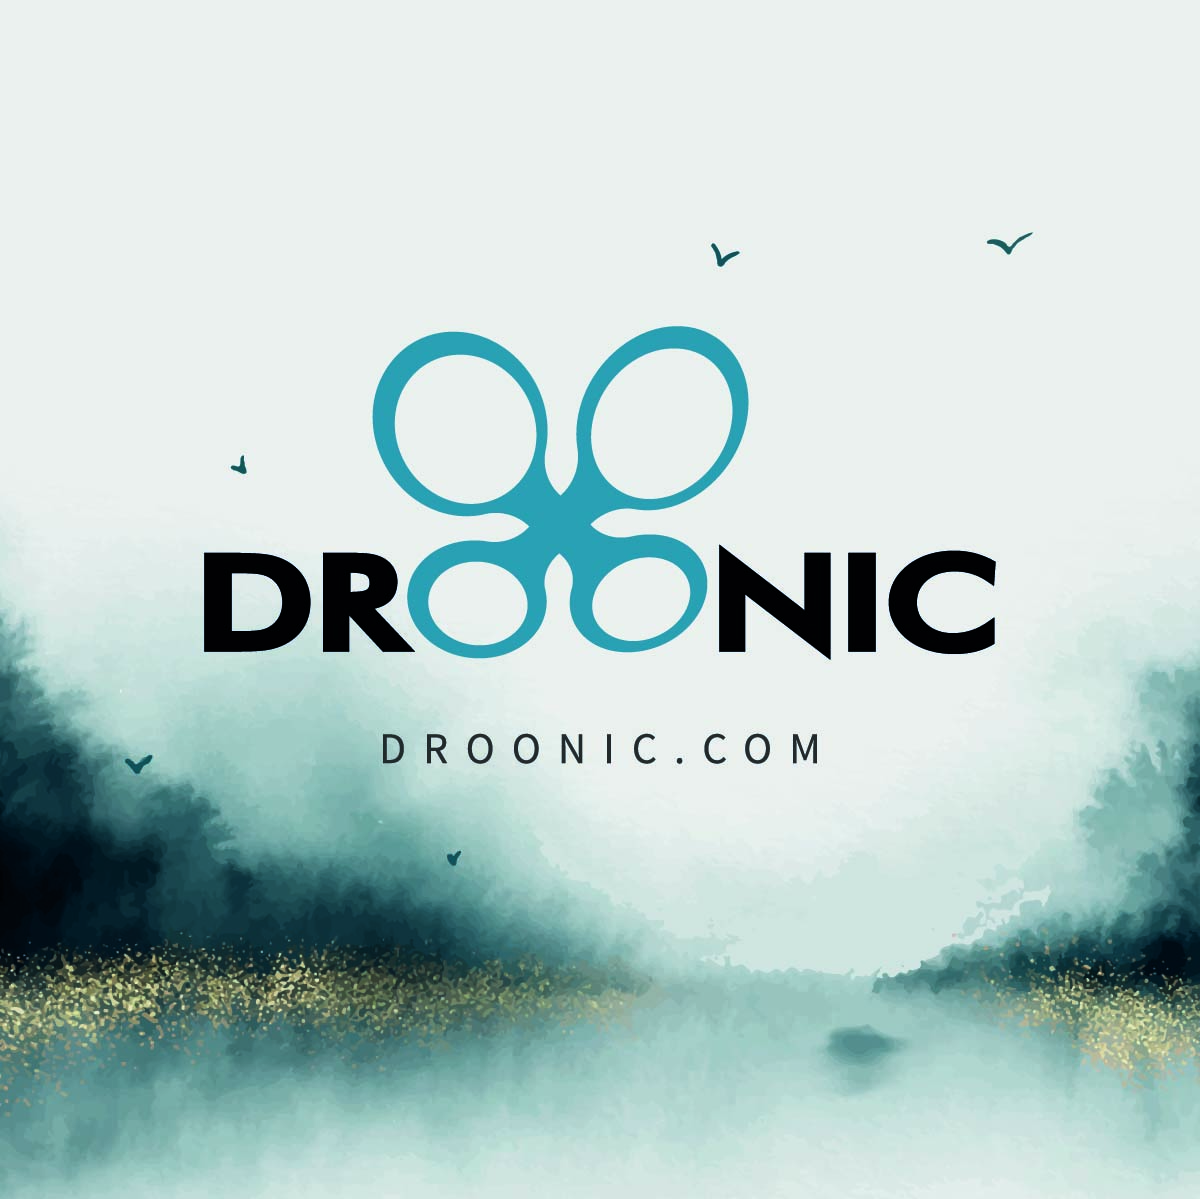 DROONIC - Drone Branding for sale - by Brandizle